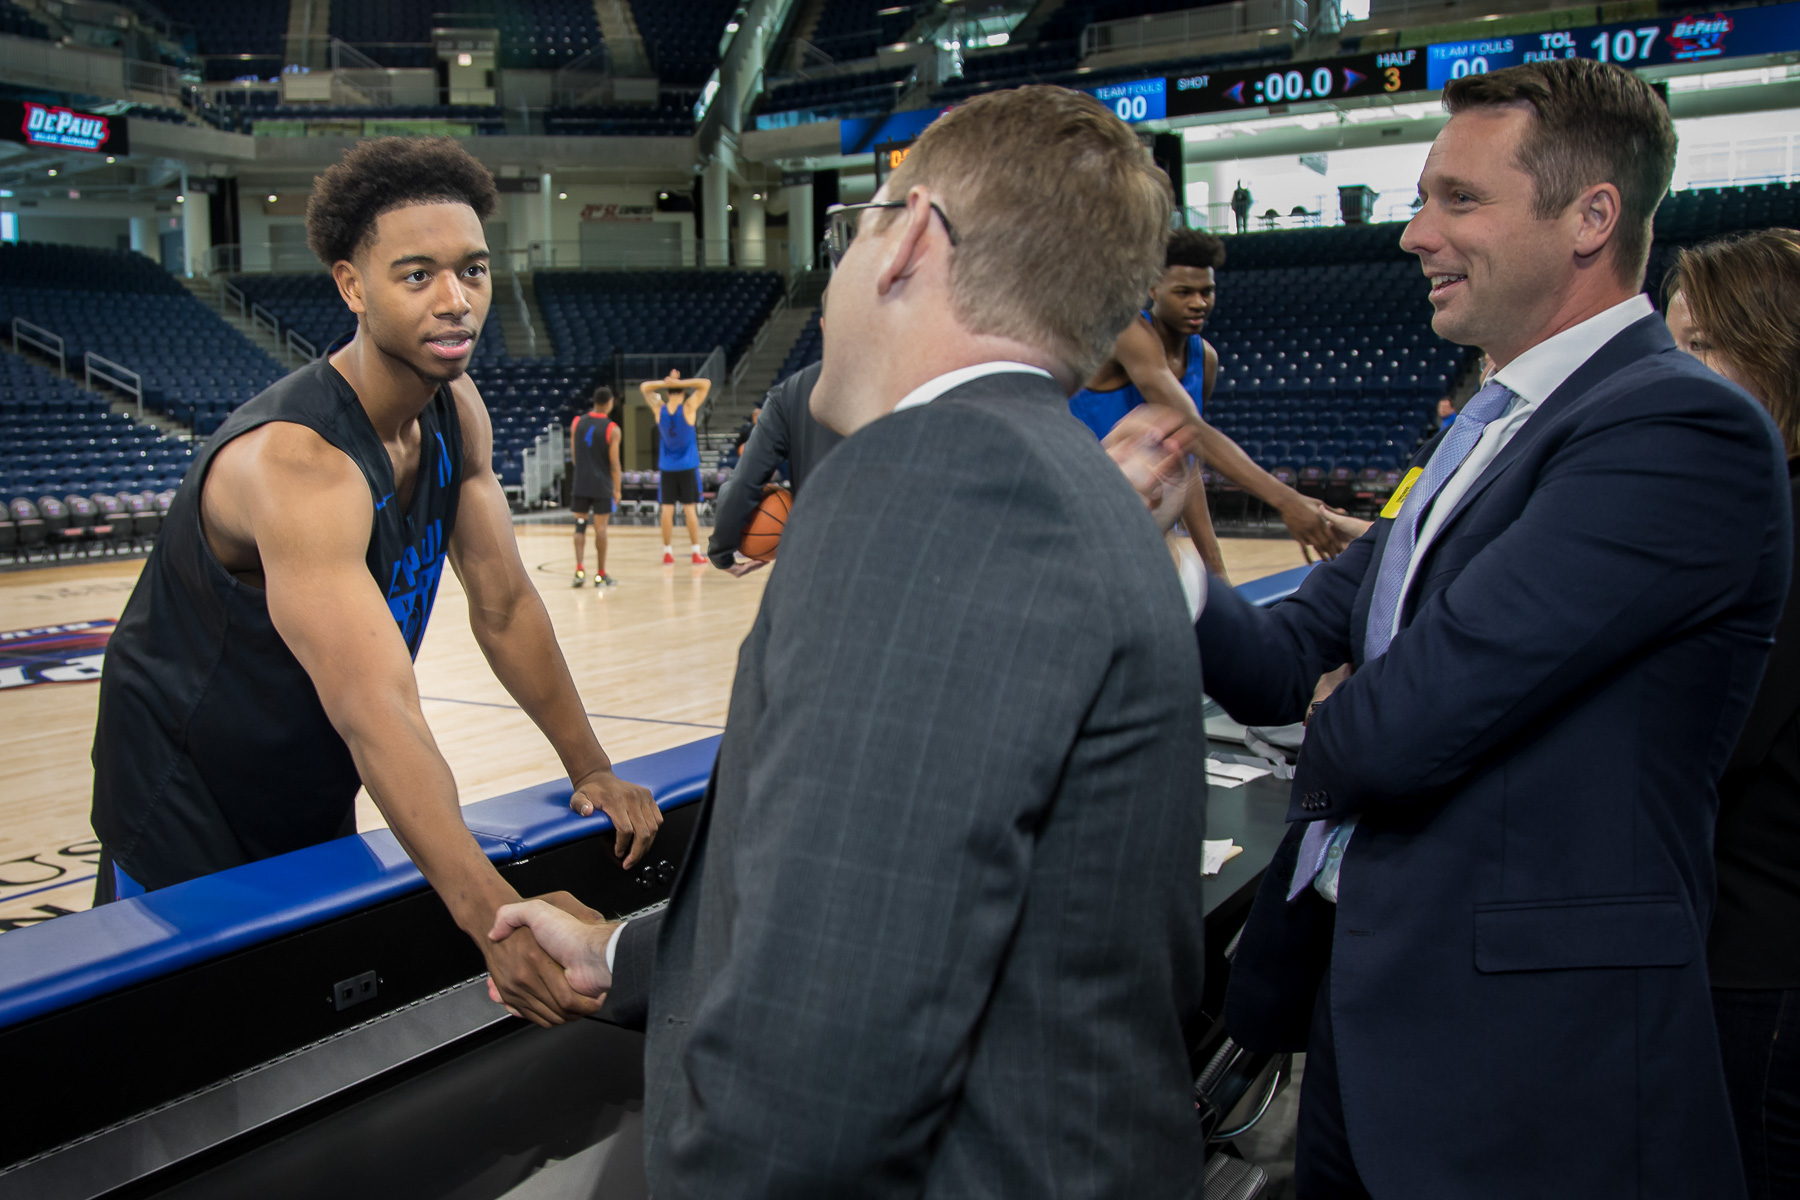 DePaul basketball player Eli Cain, left, greets an attendee. (DePaul University/Jeff Carrion)